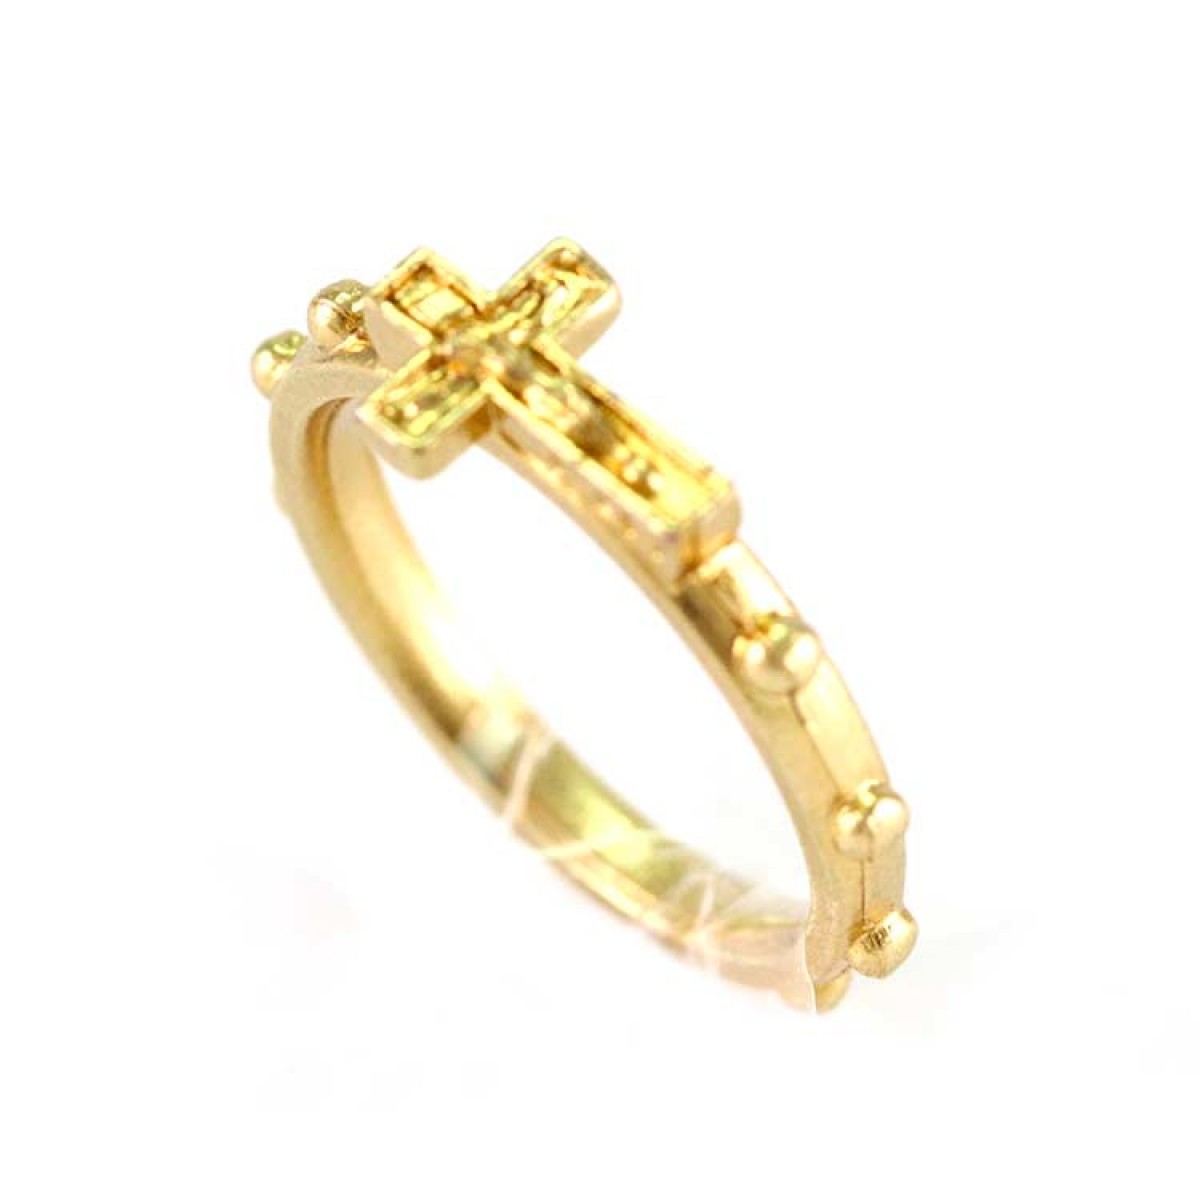 Stuller Rosary Ring R16603:73984:P:PLAT PL - Fashion Rings | Don's Jewelry  & Design | Washington, IA